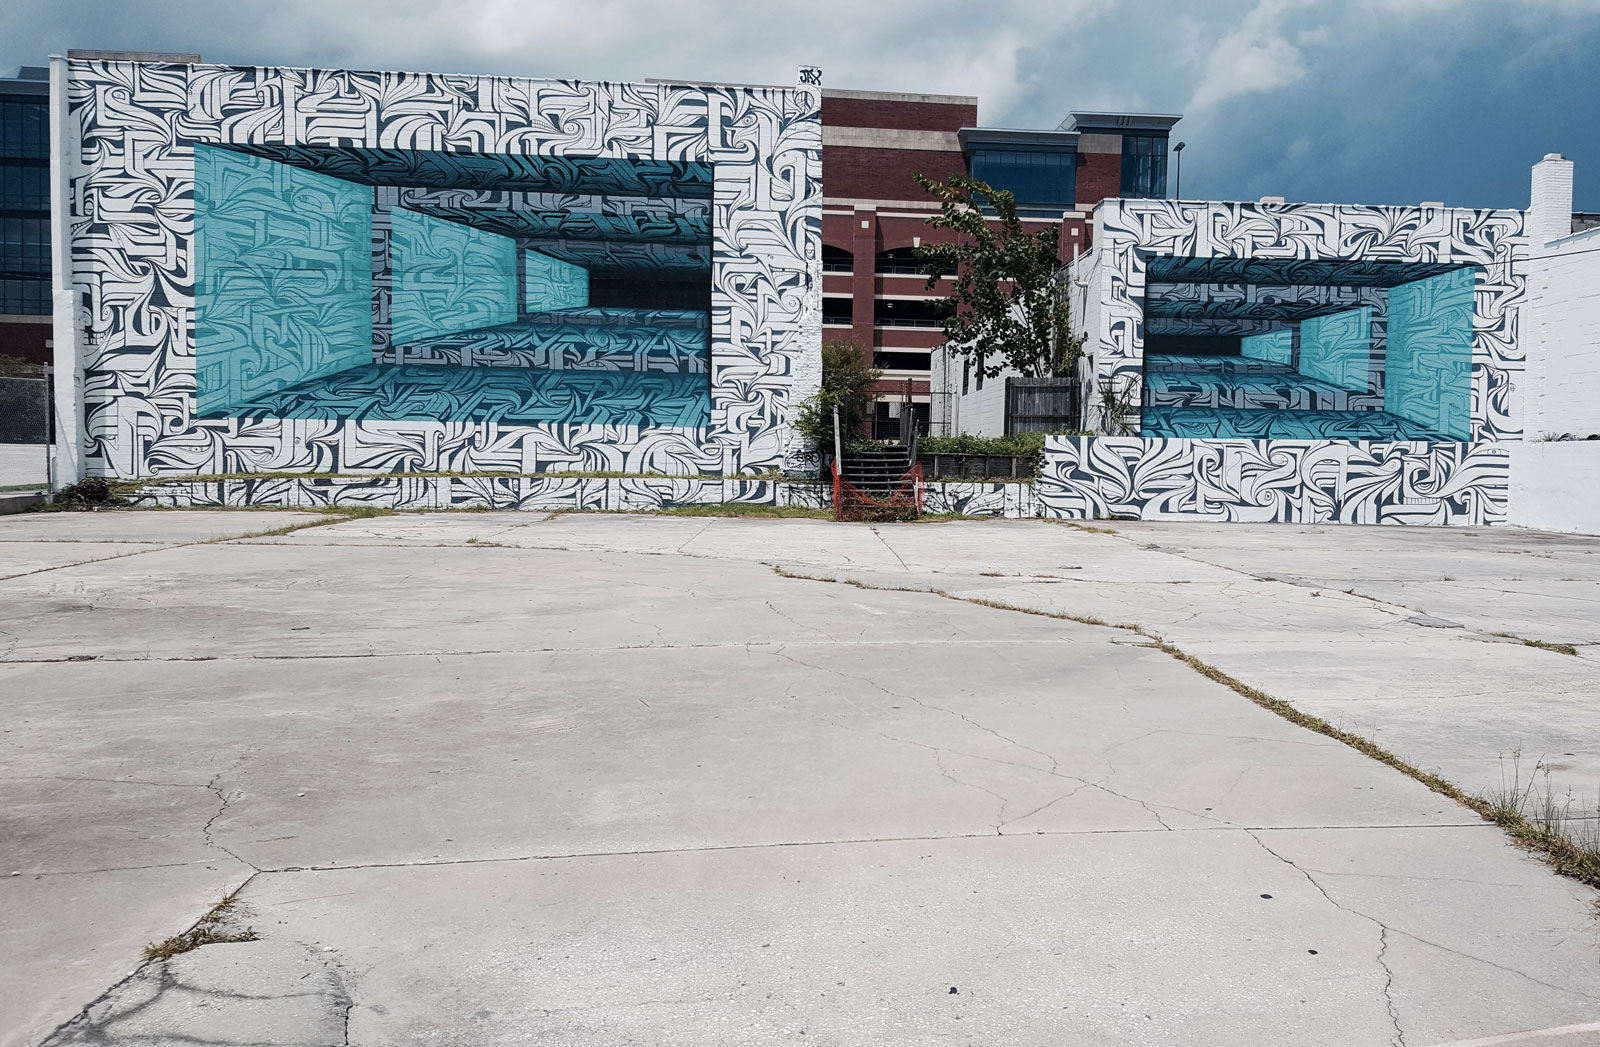 Street Art in Jacksonville, FL